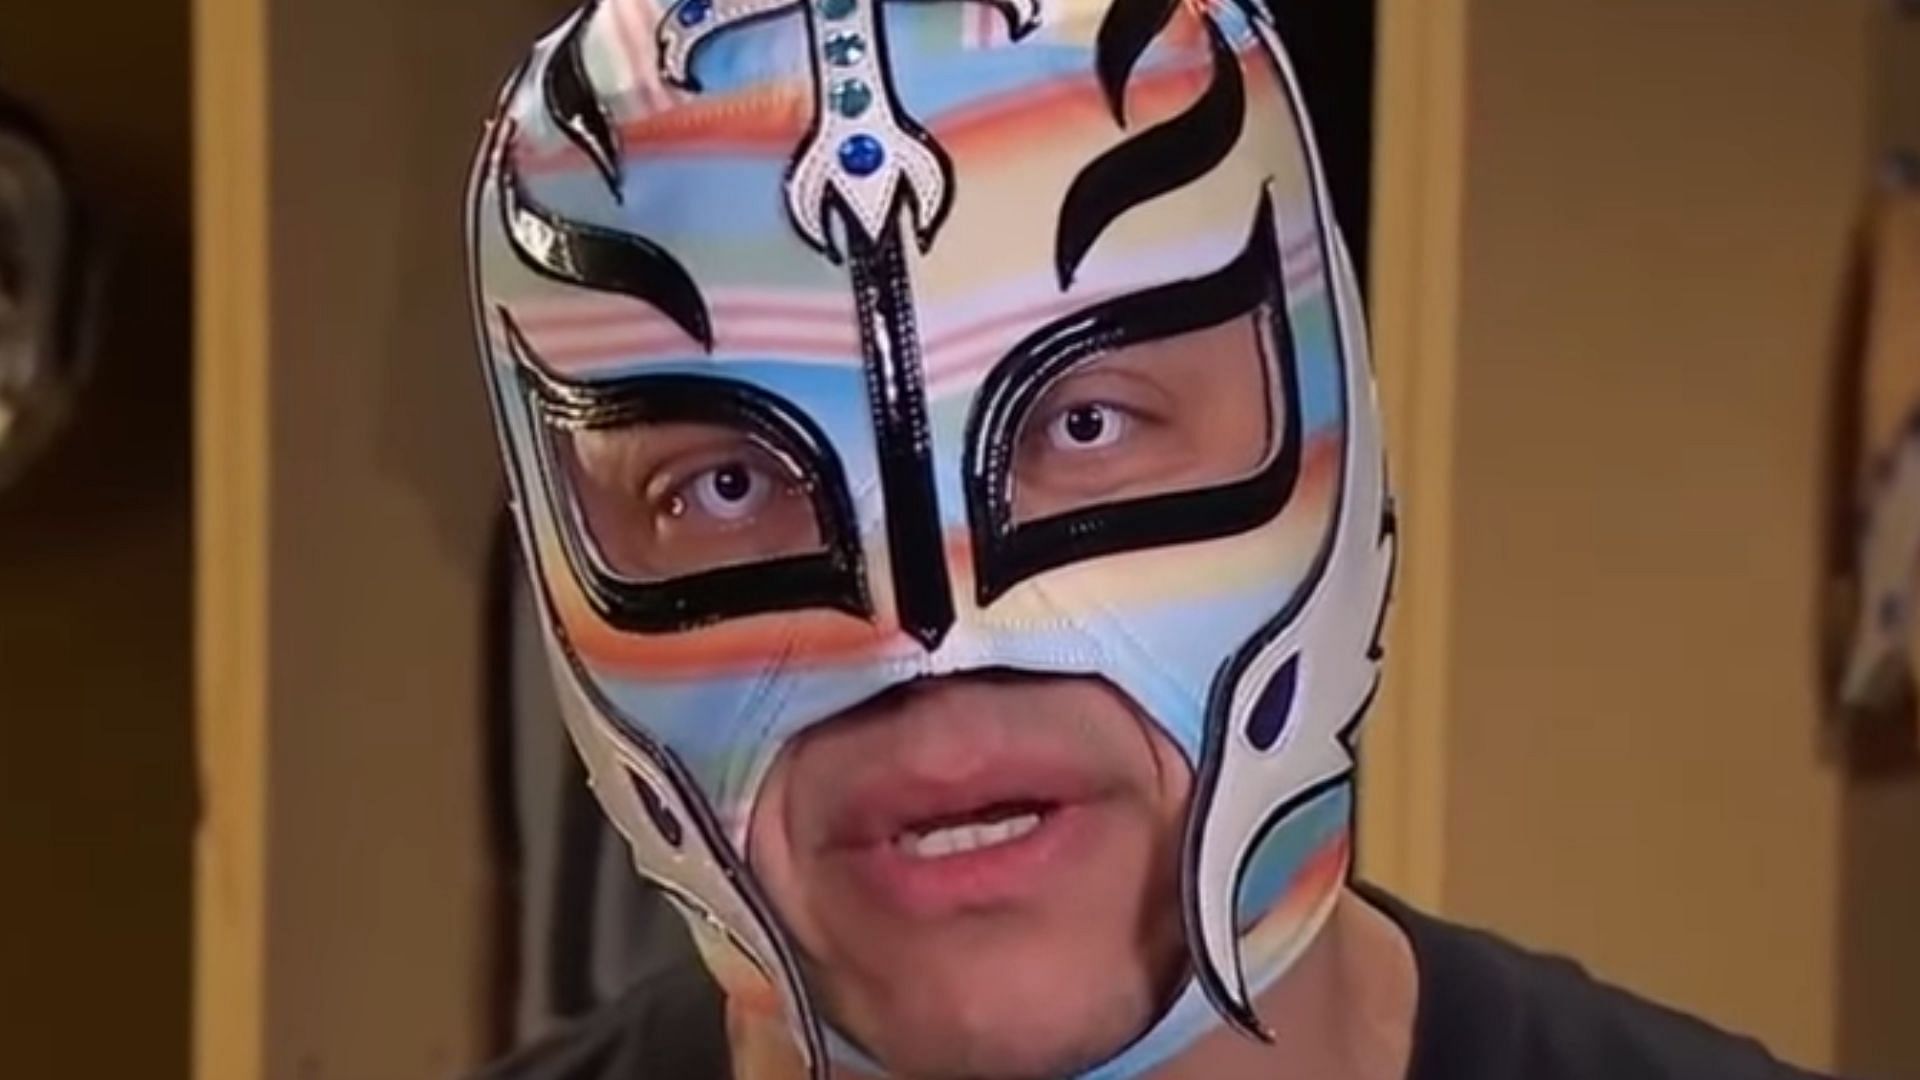 WWE Hall of Famer Rey Mysterio